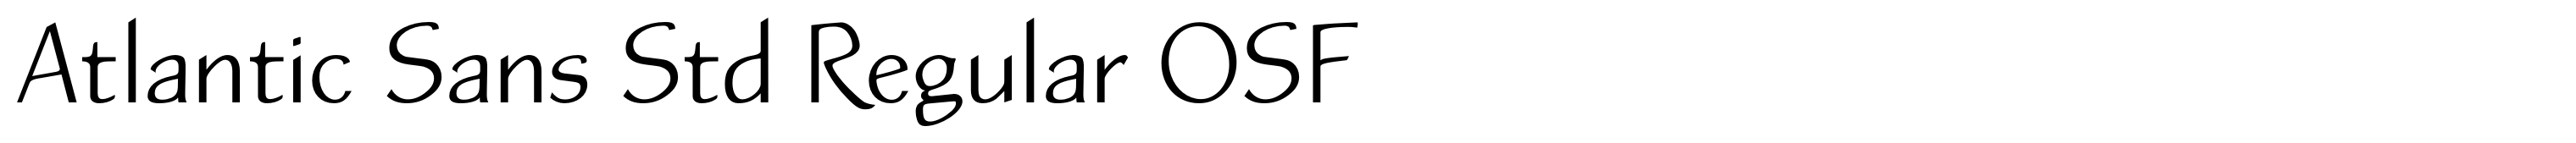 Atlantic Sans Std Regular OSF